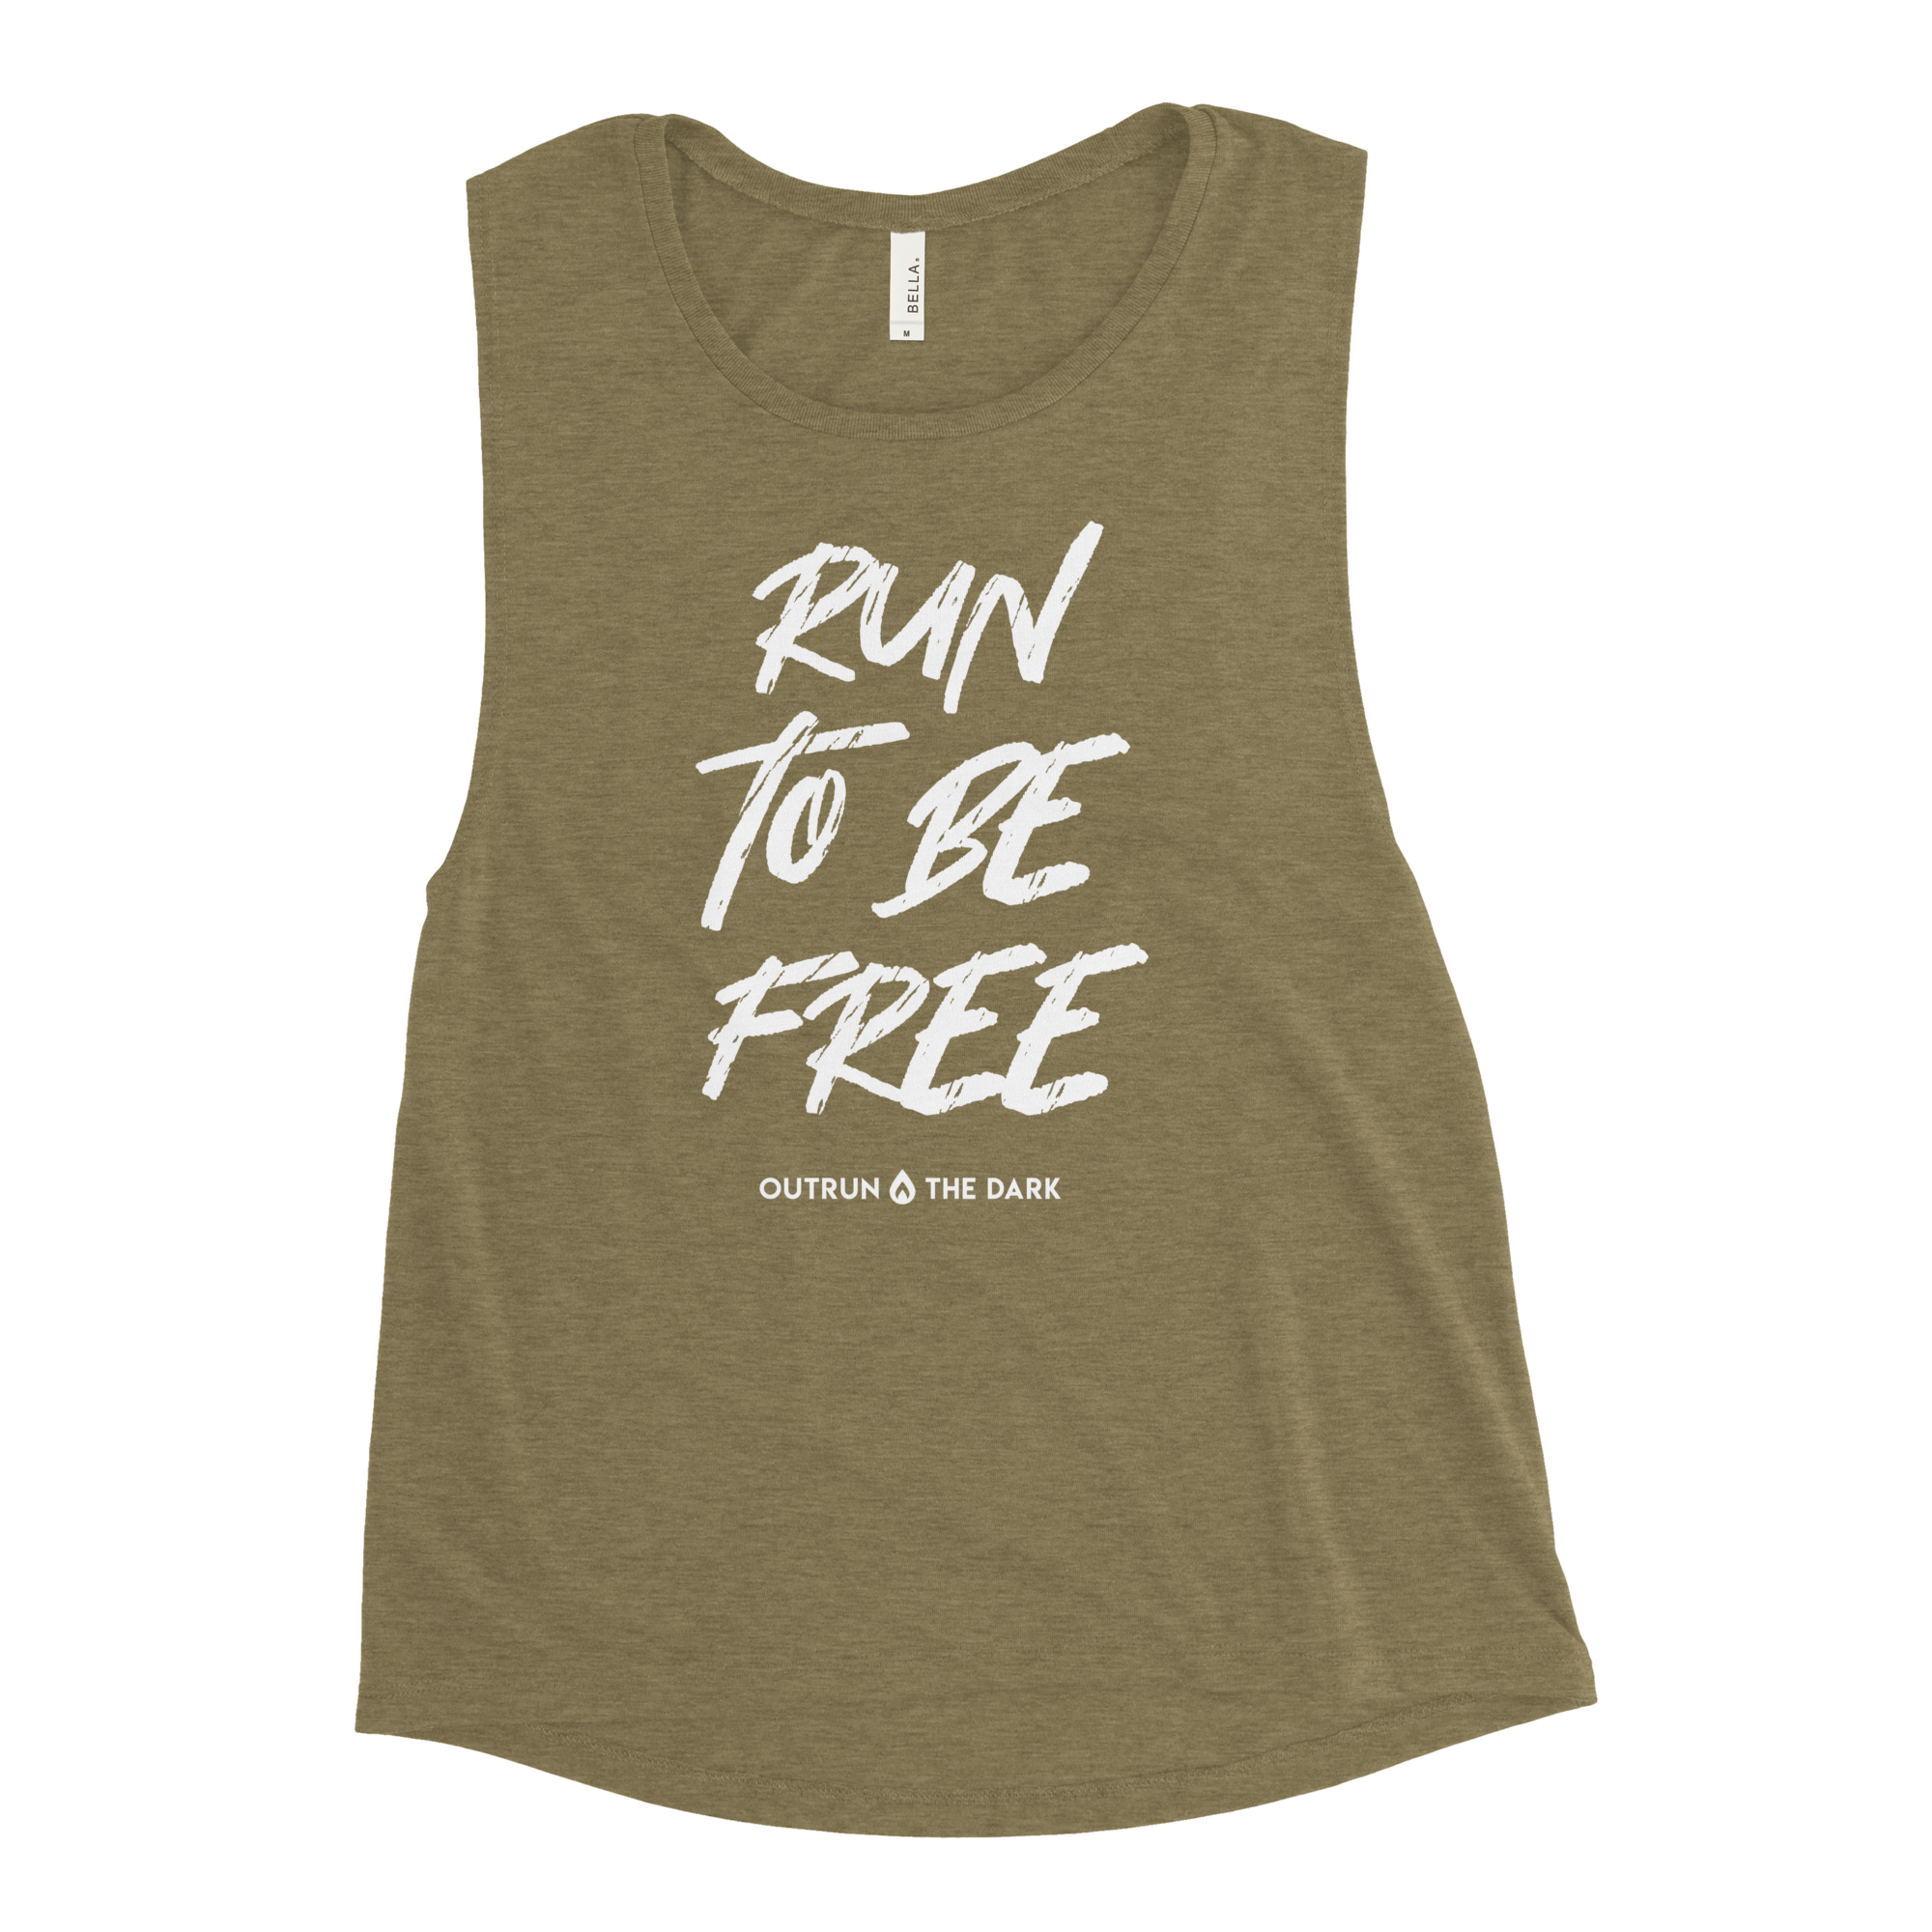 Run to be free Ladies’ Muscle Tank